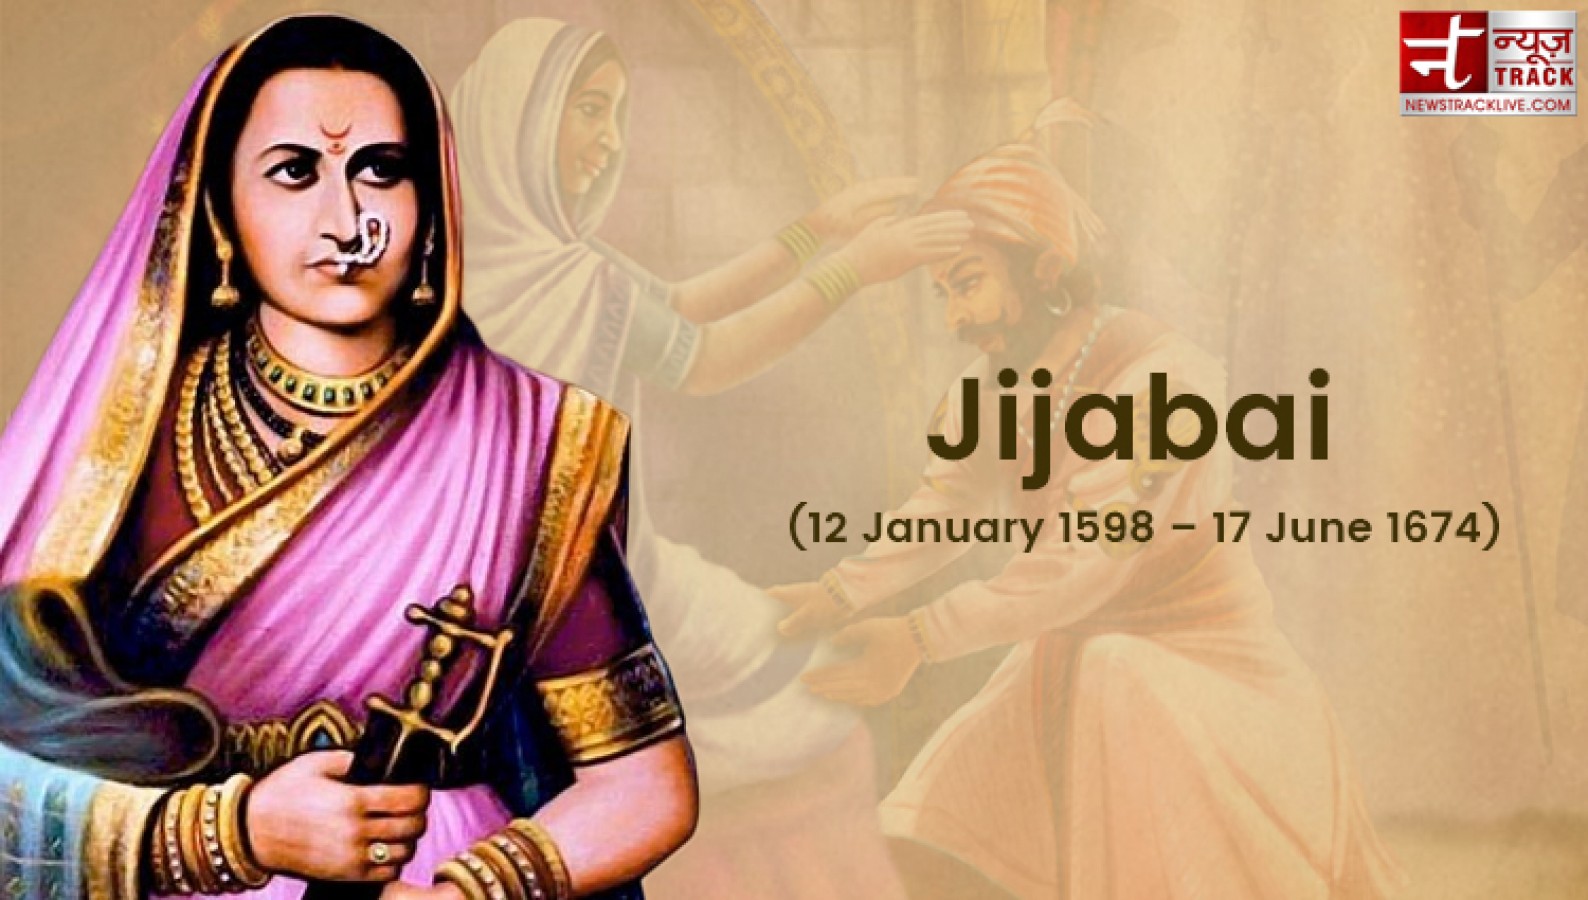 Jijabai gave birth to 8 children, made 'Shivaji Maharaj' great ...